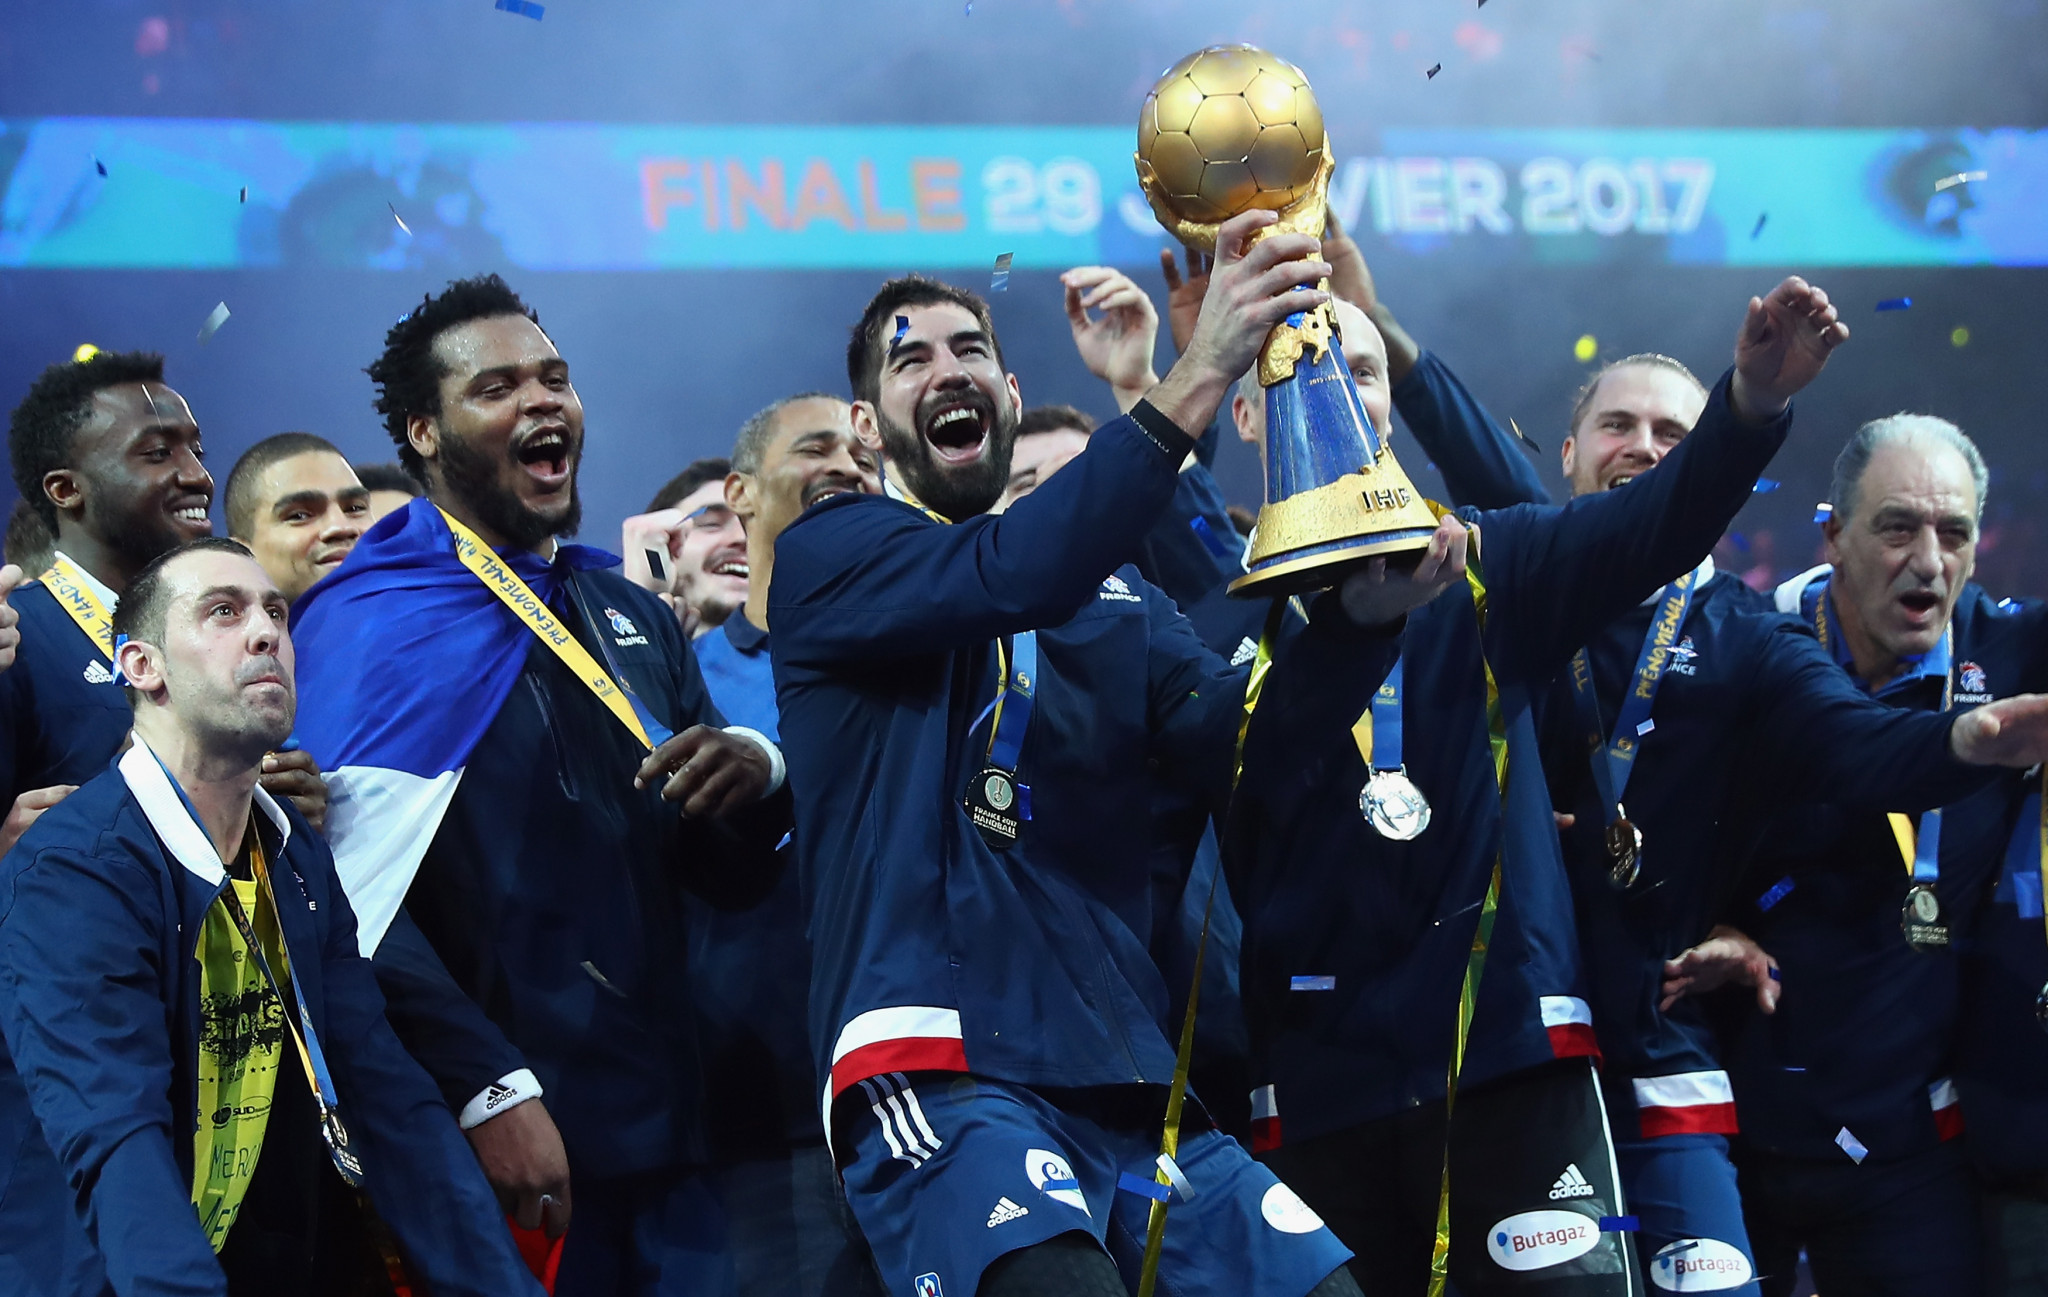 France seeking third successive title as 2019 Handball World looms